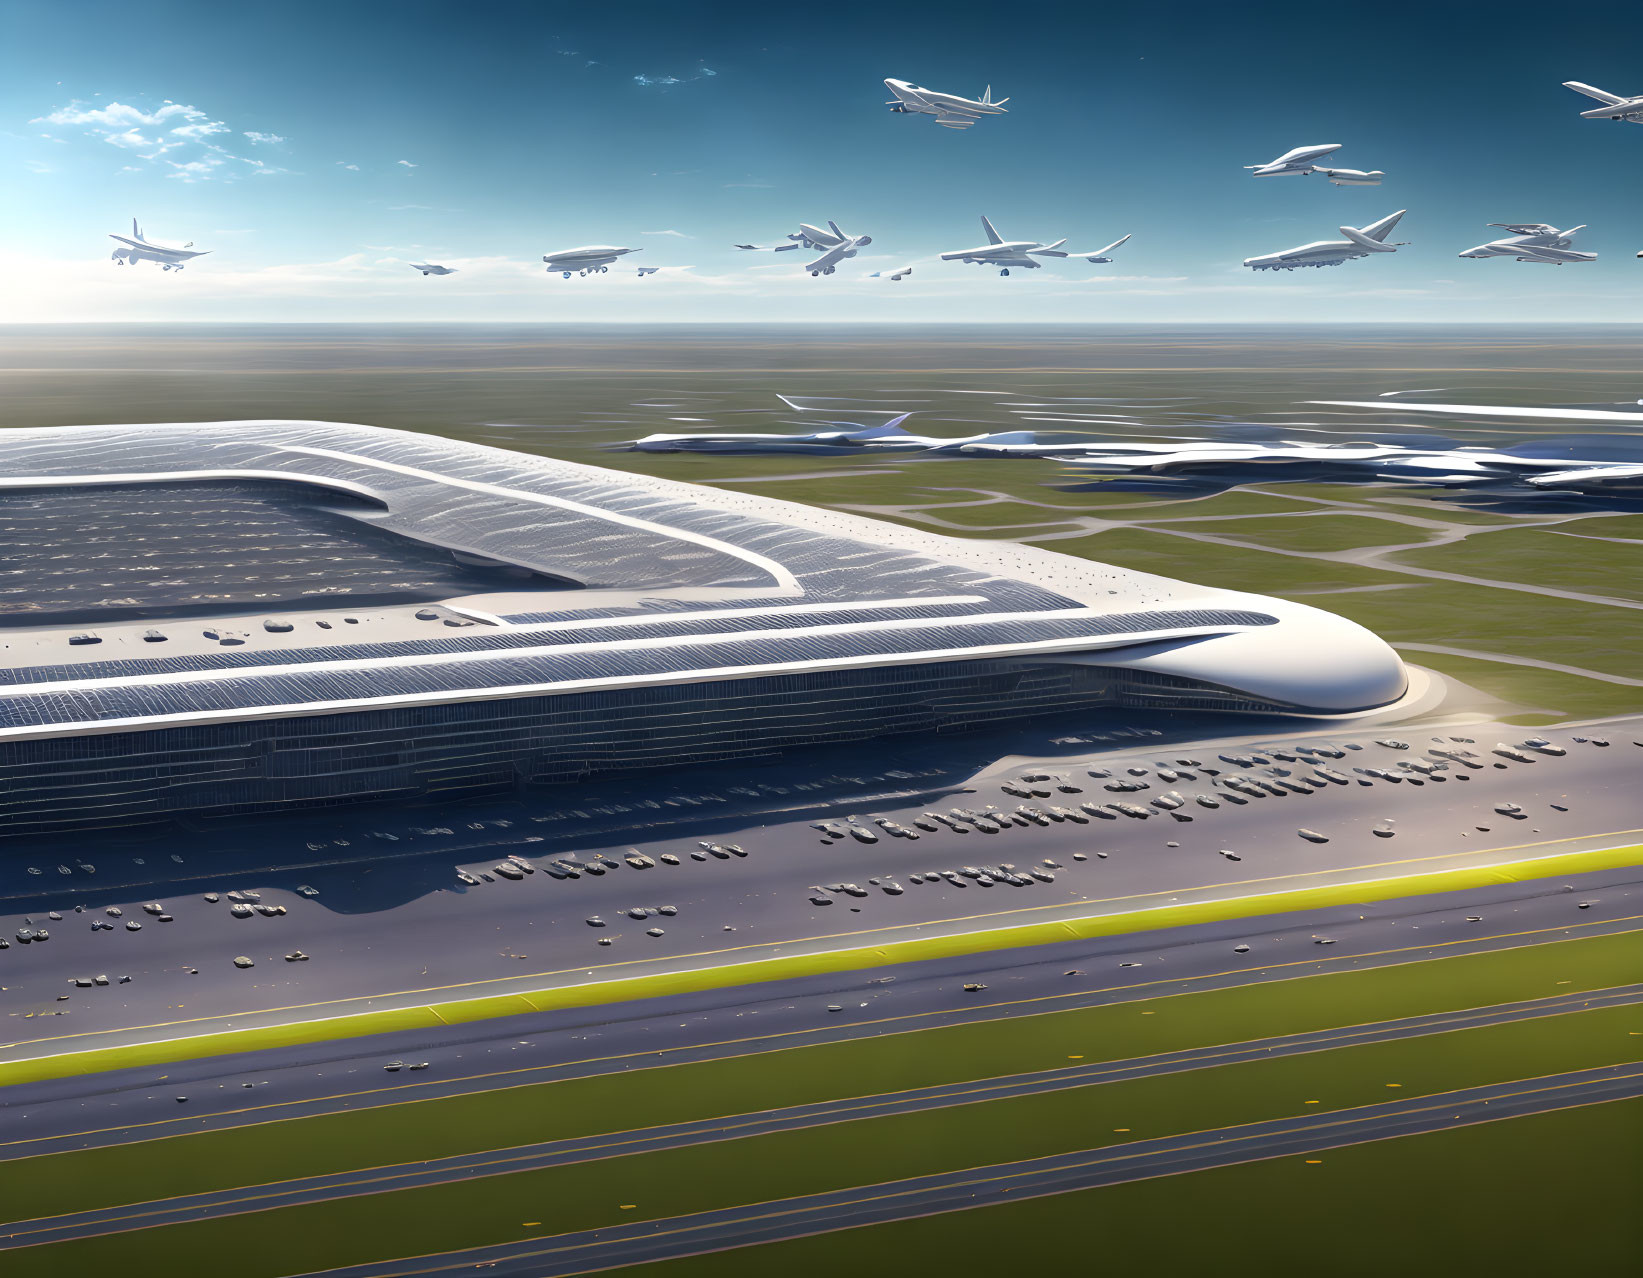 Big future airport “landi airport”